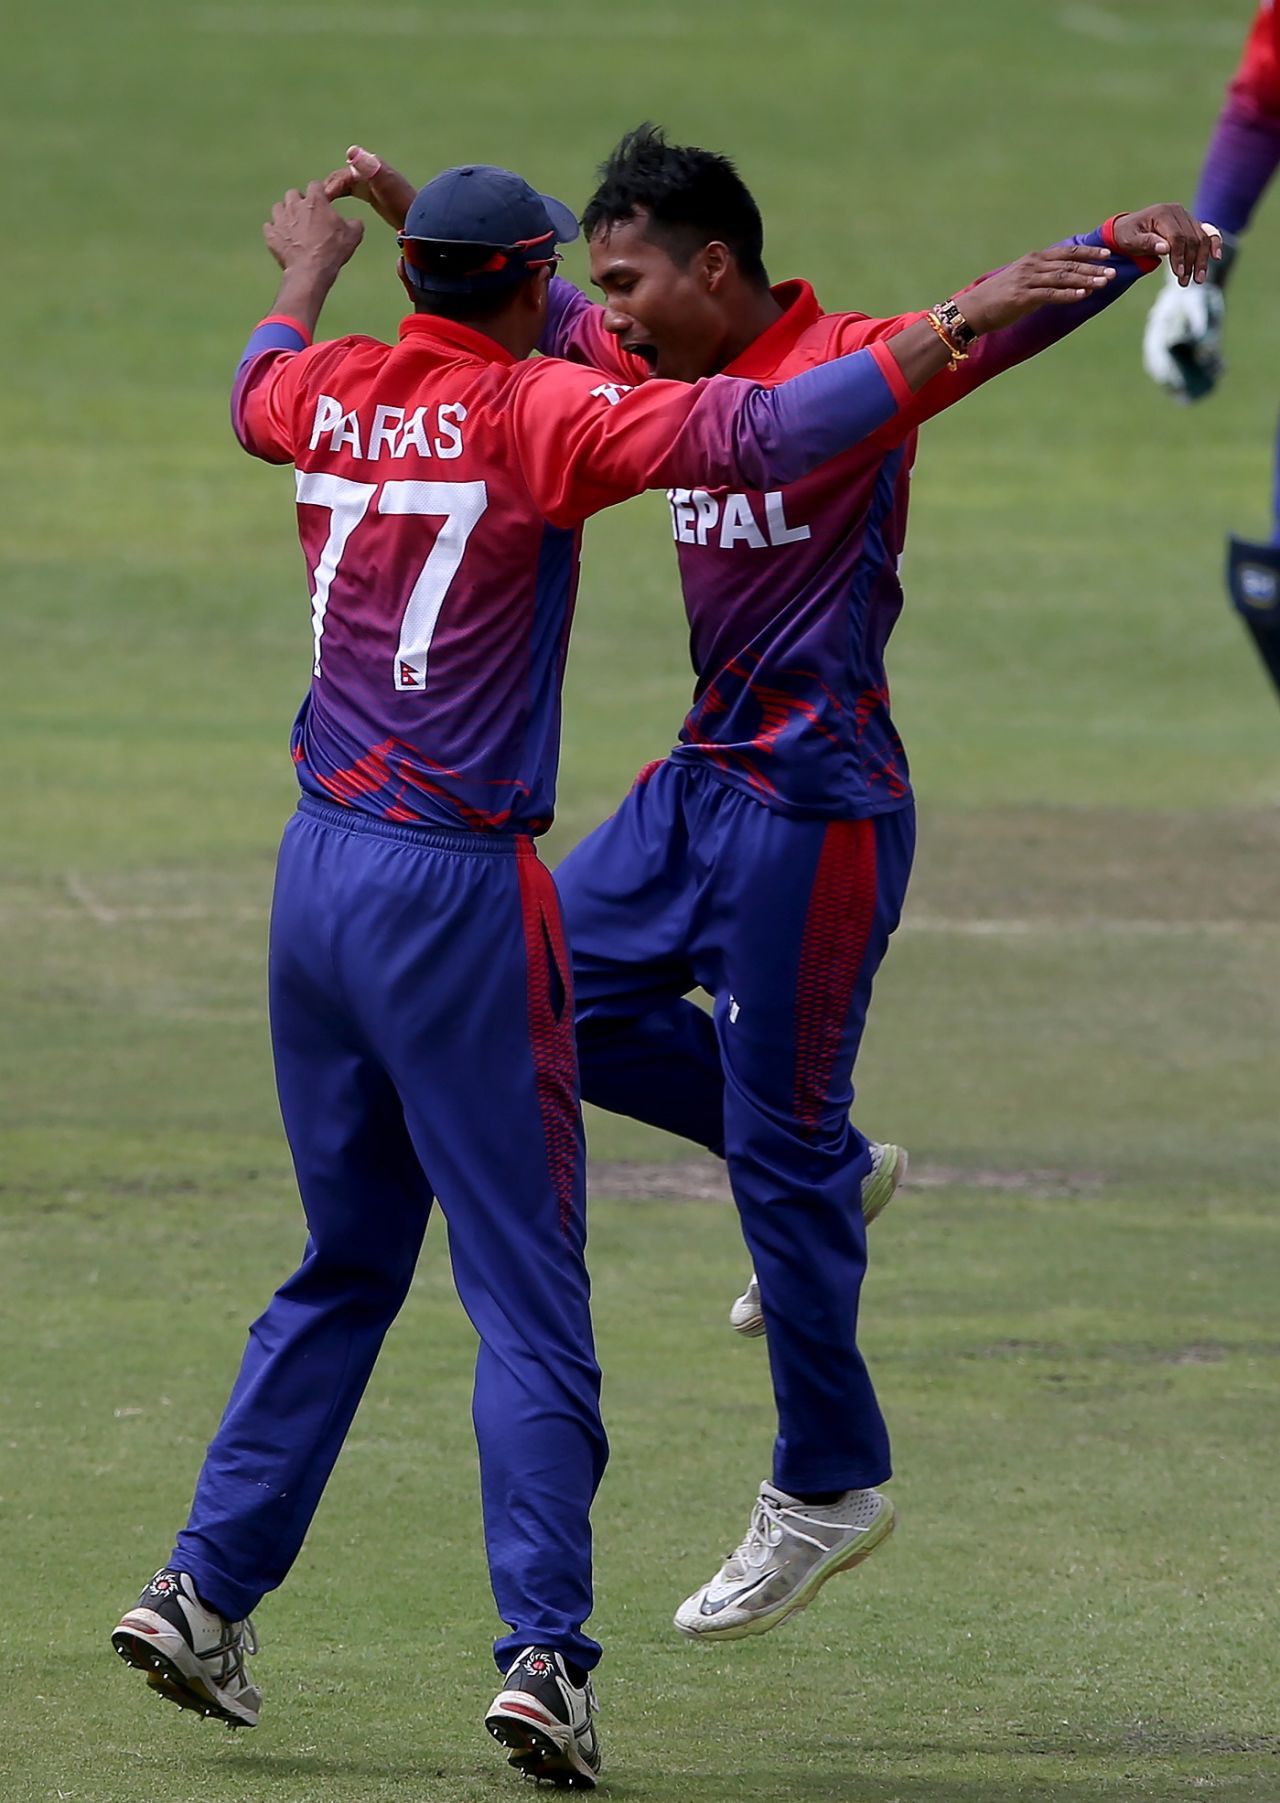 Nepal won the T20I series 2-1